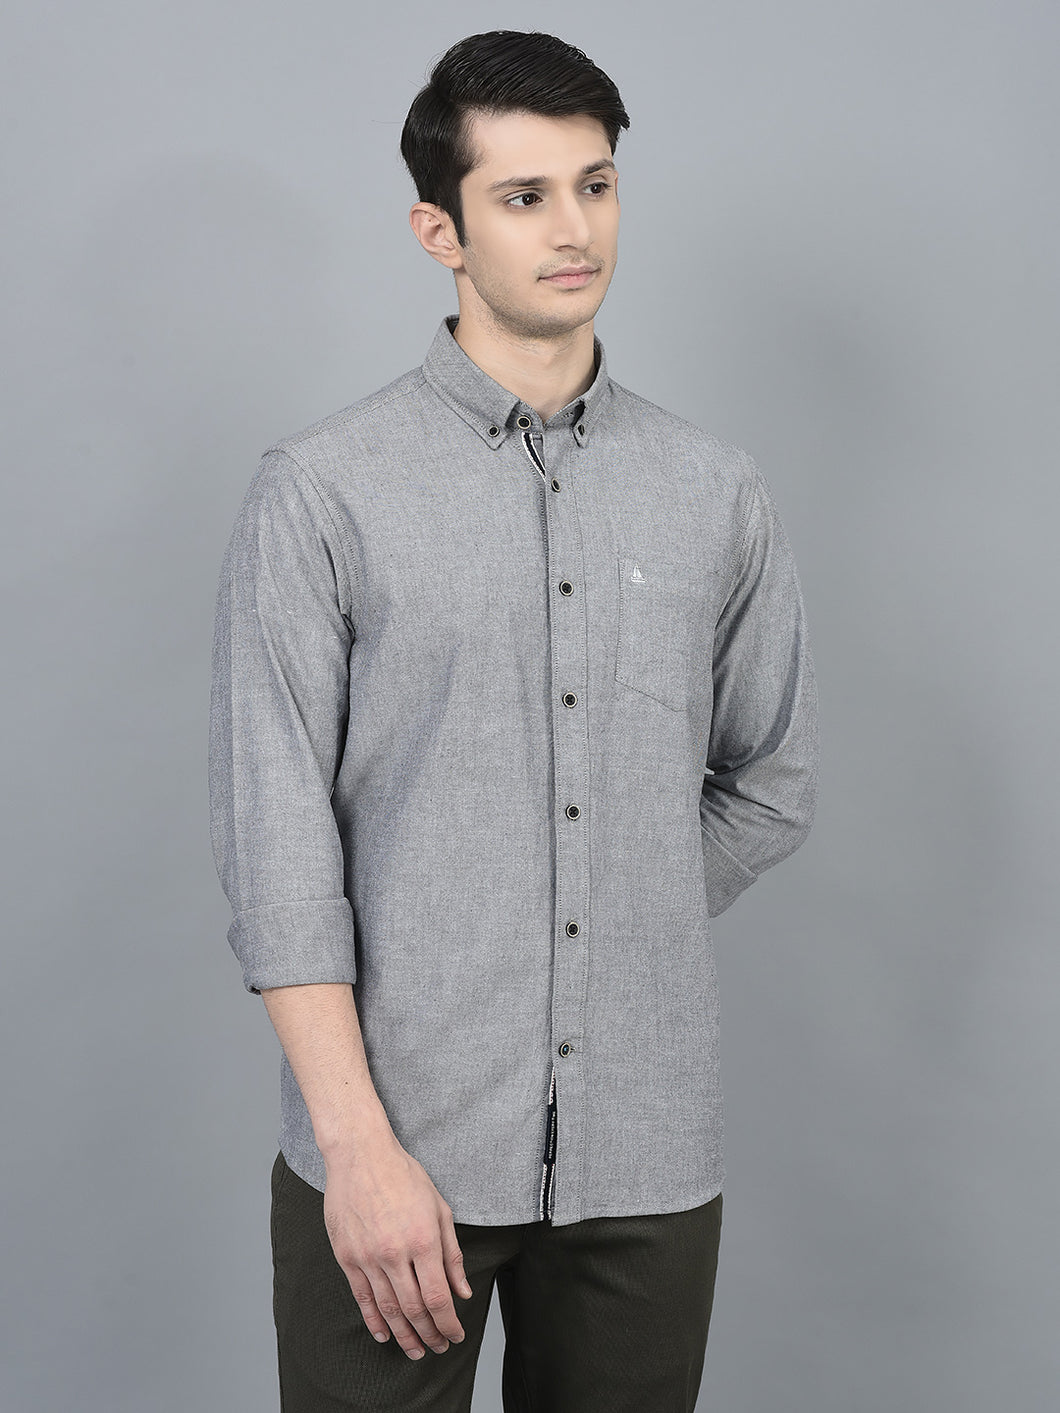 CANOE MEN Casual Shirt Grey Color Cotton Fabric Button Closure Solid